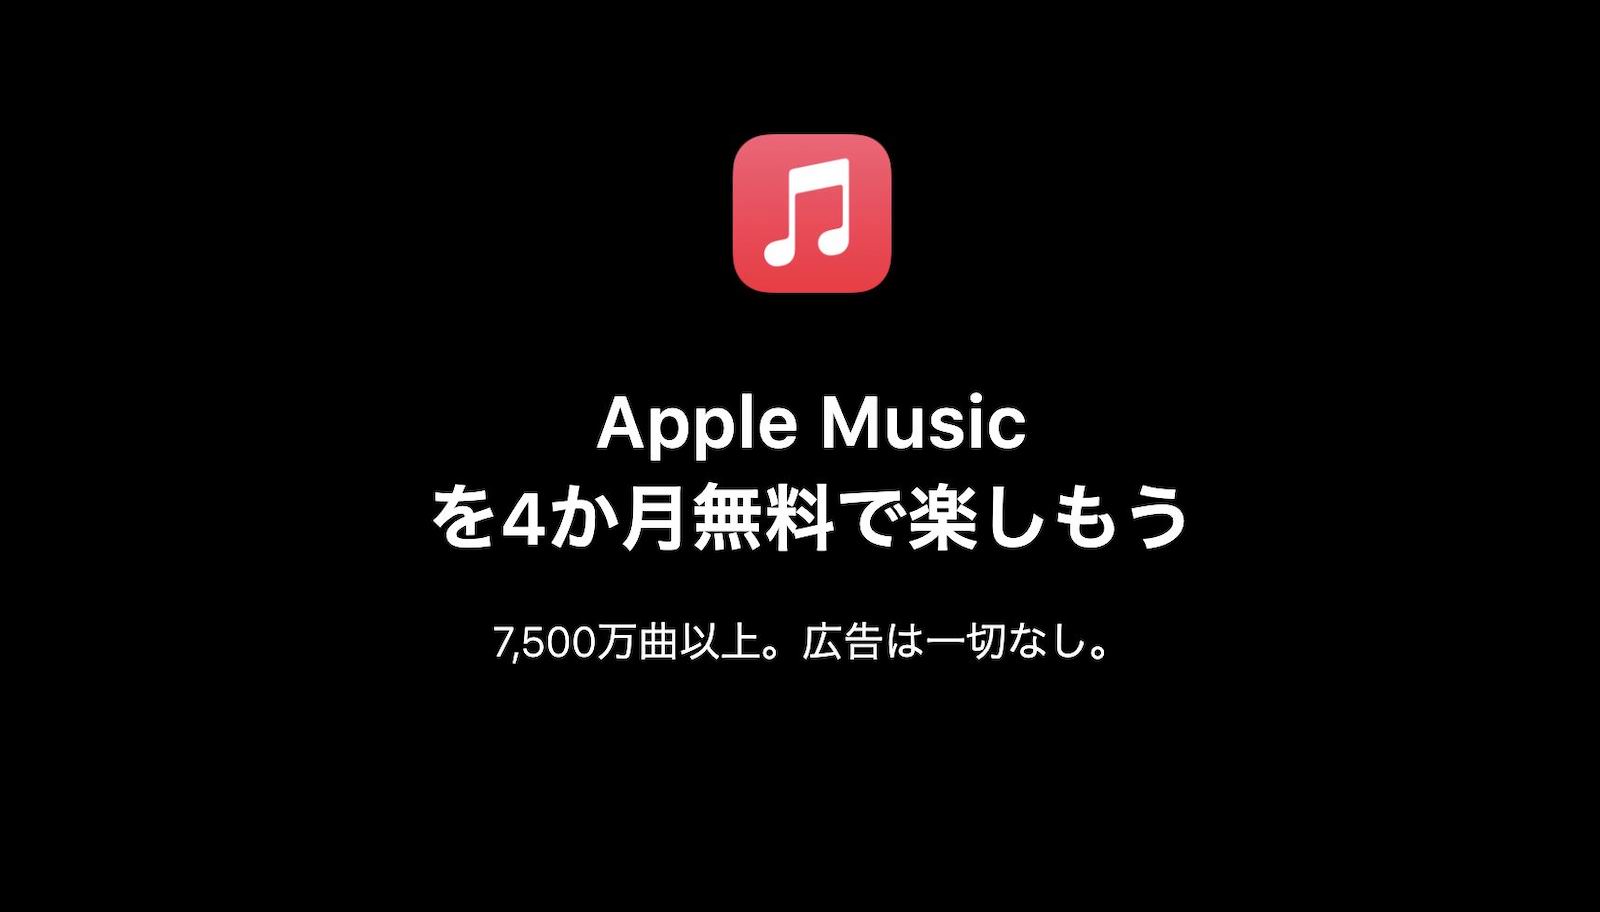 Apple-Music-1-month-free.jpg